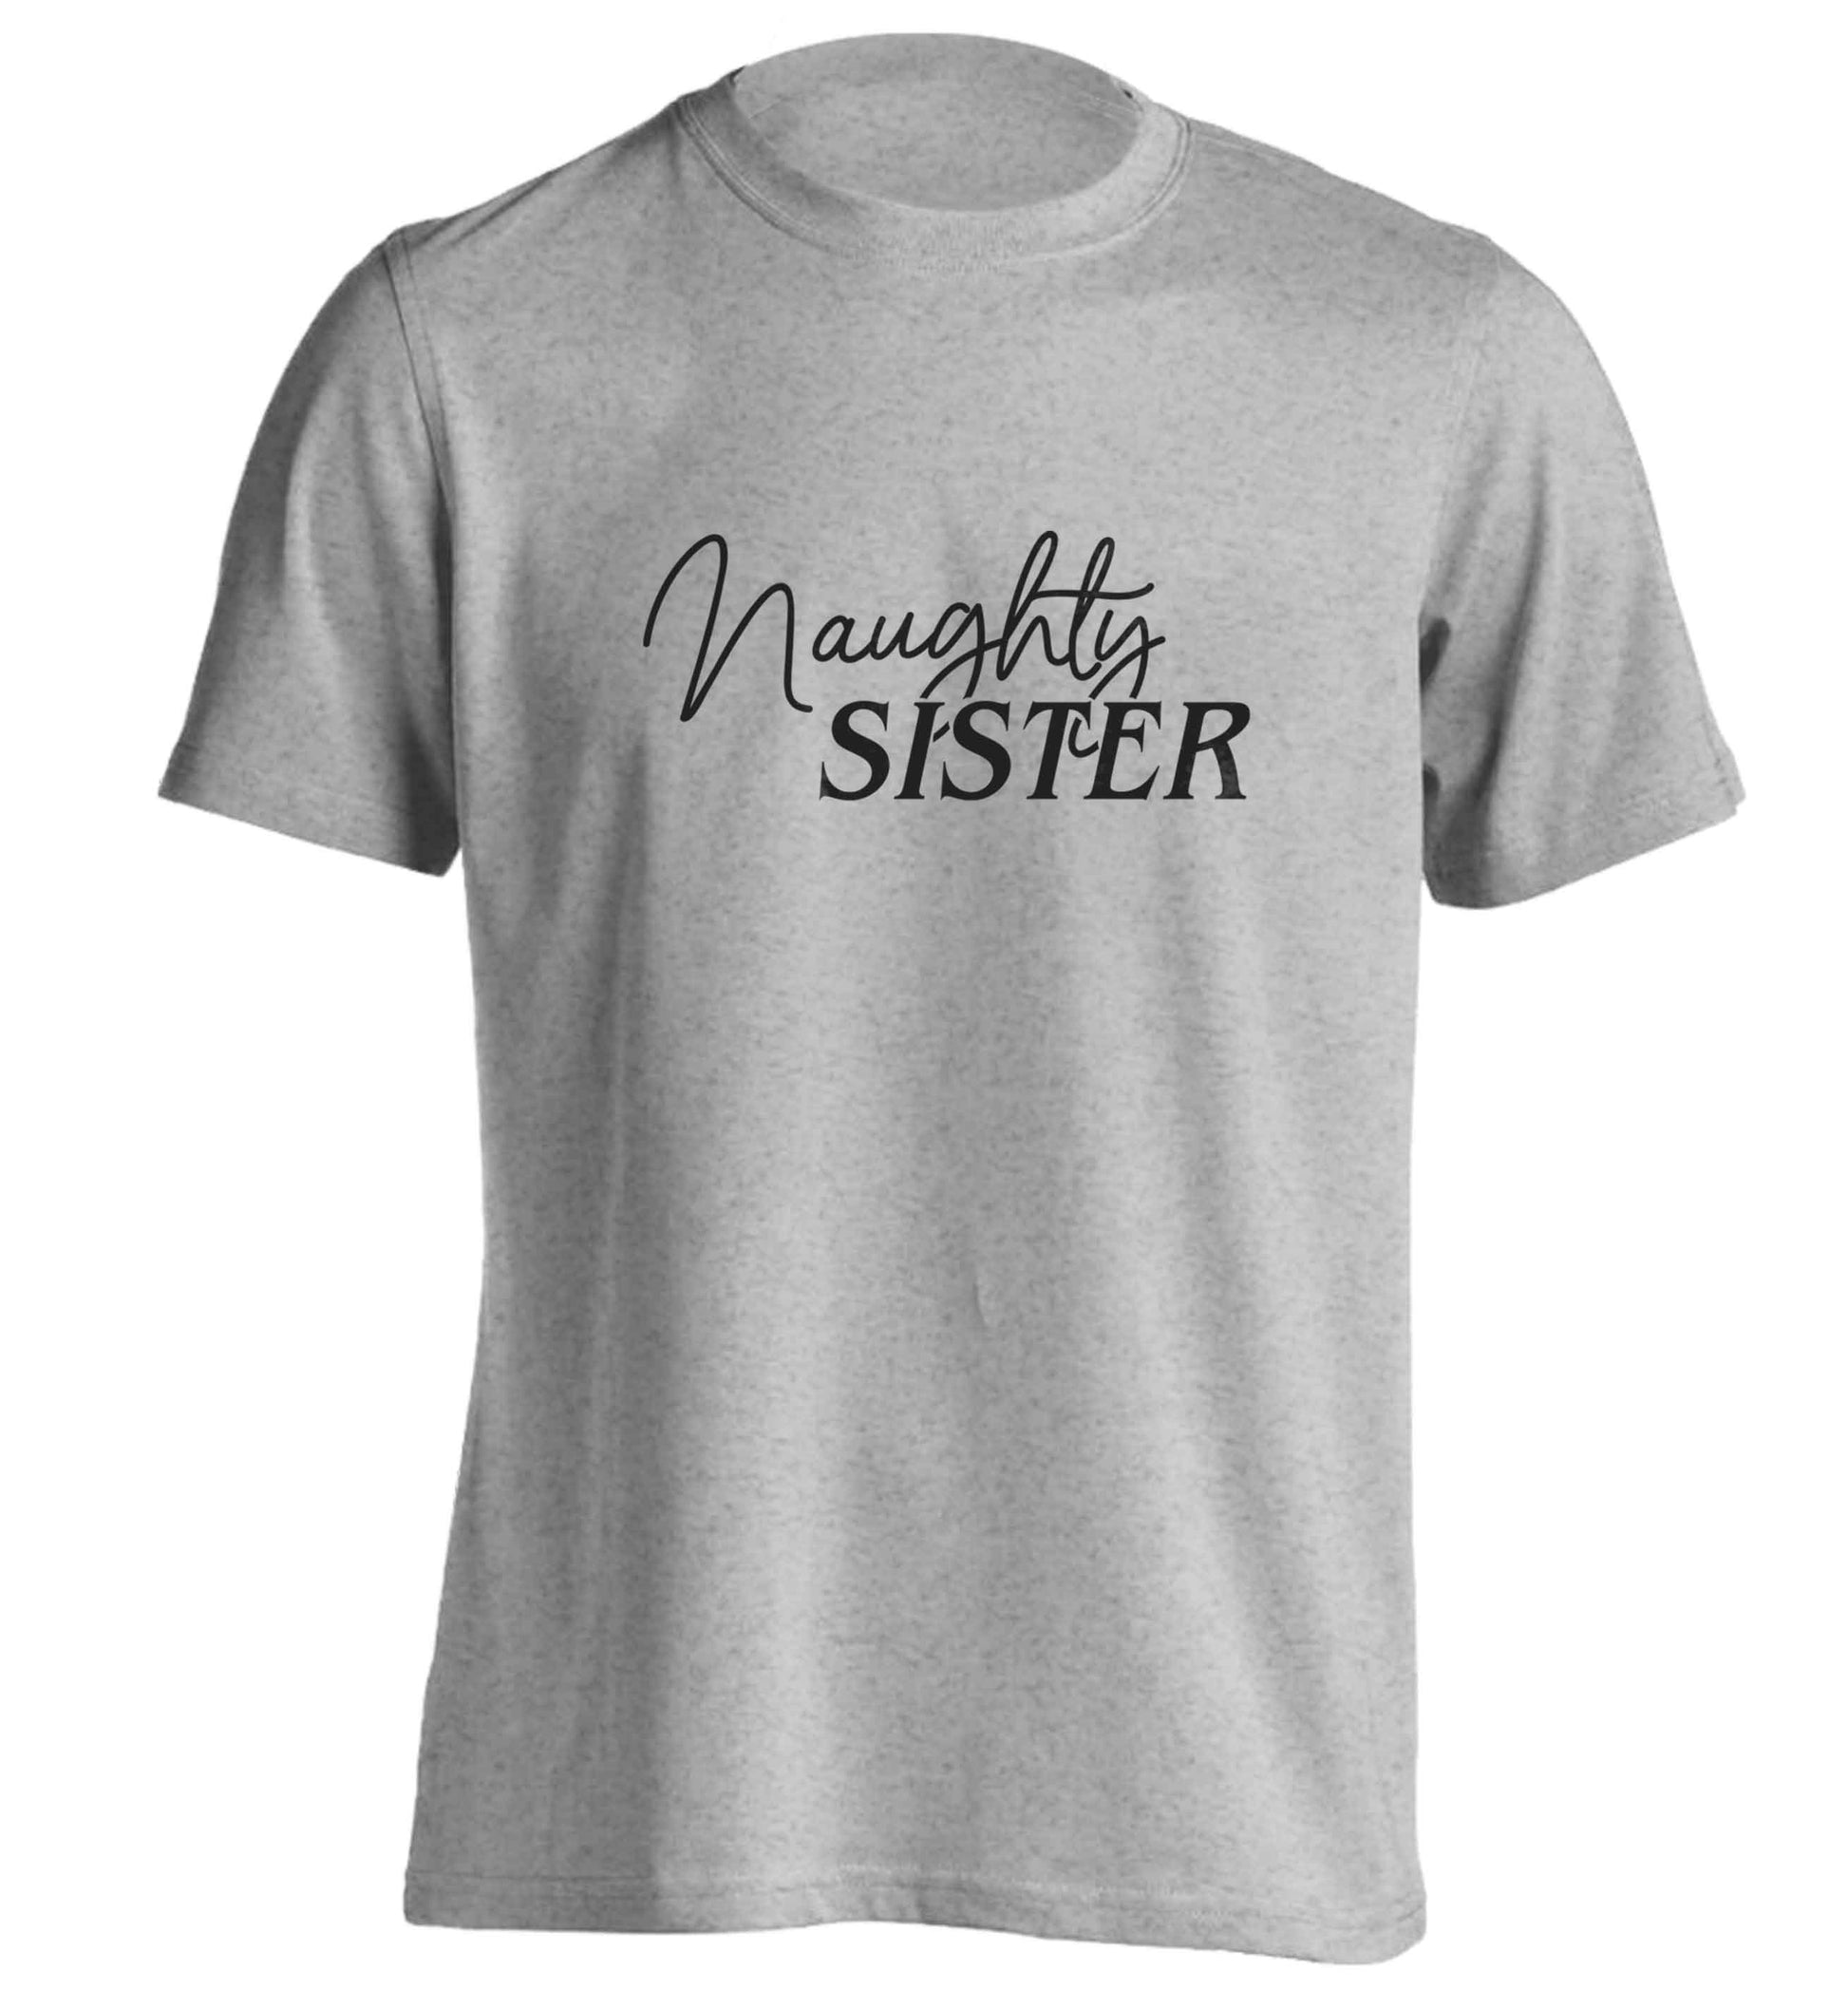 Naughty Sister adults unisex grey Tshirt 2XL